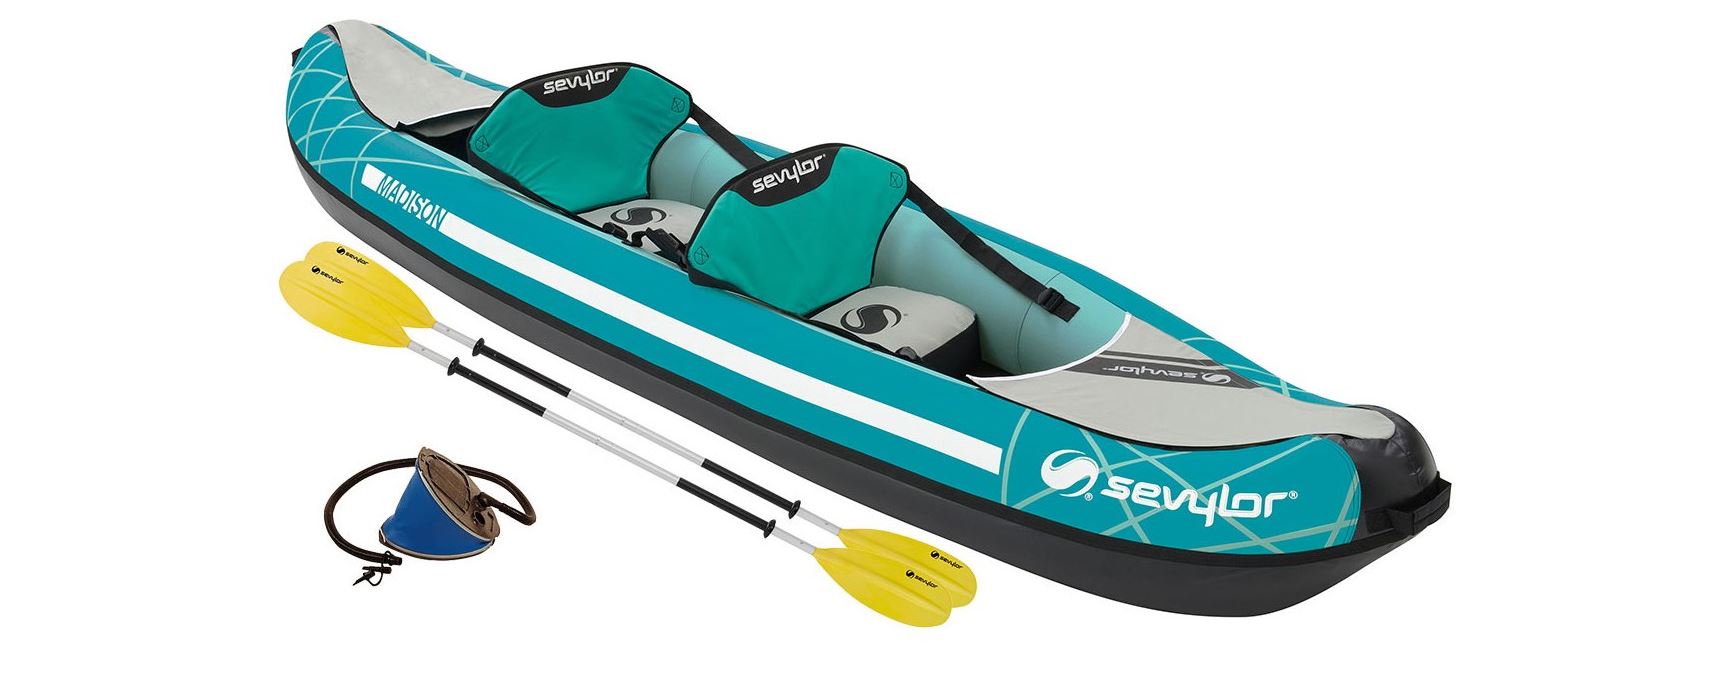 Sevylor Madison Inflatable Kayak Kit £399.99